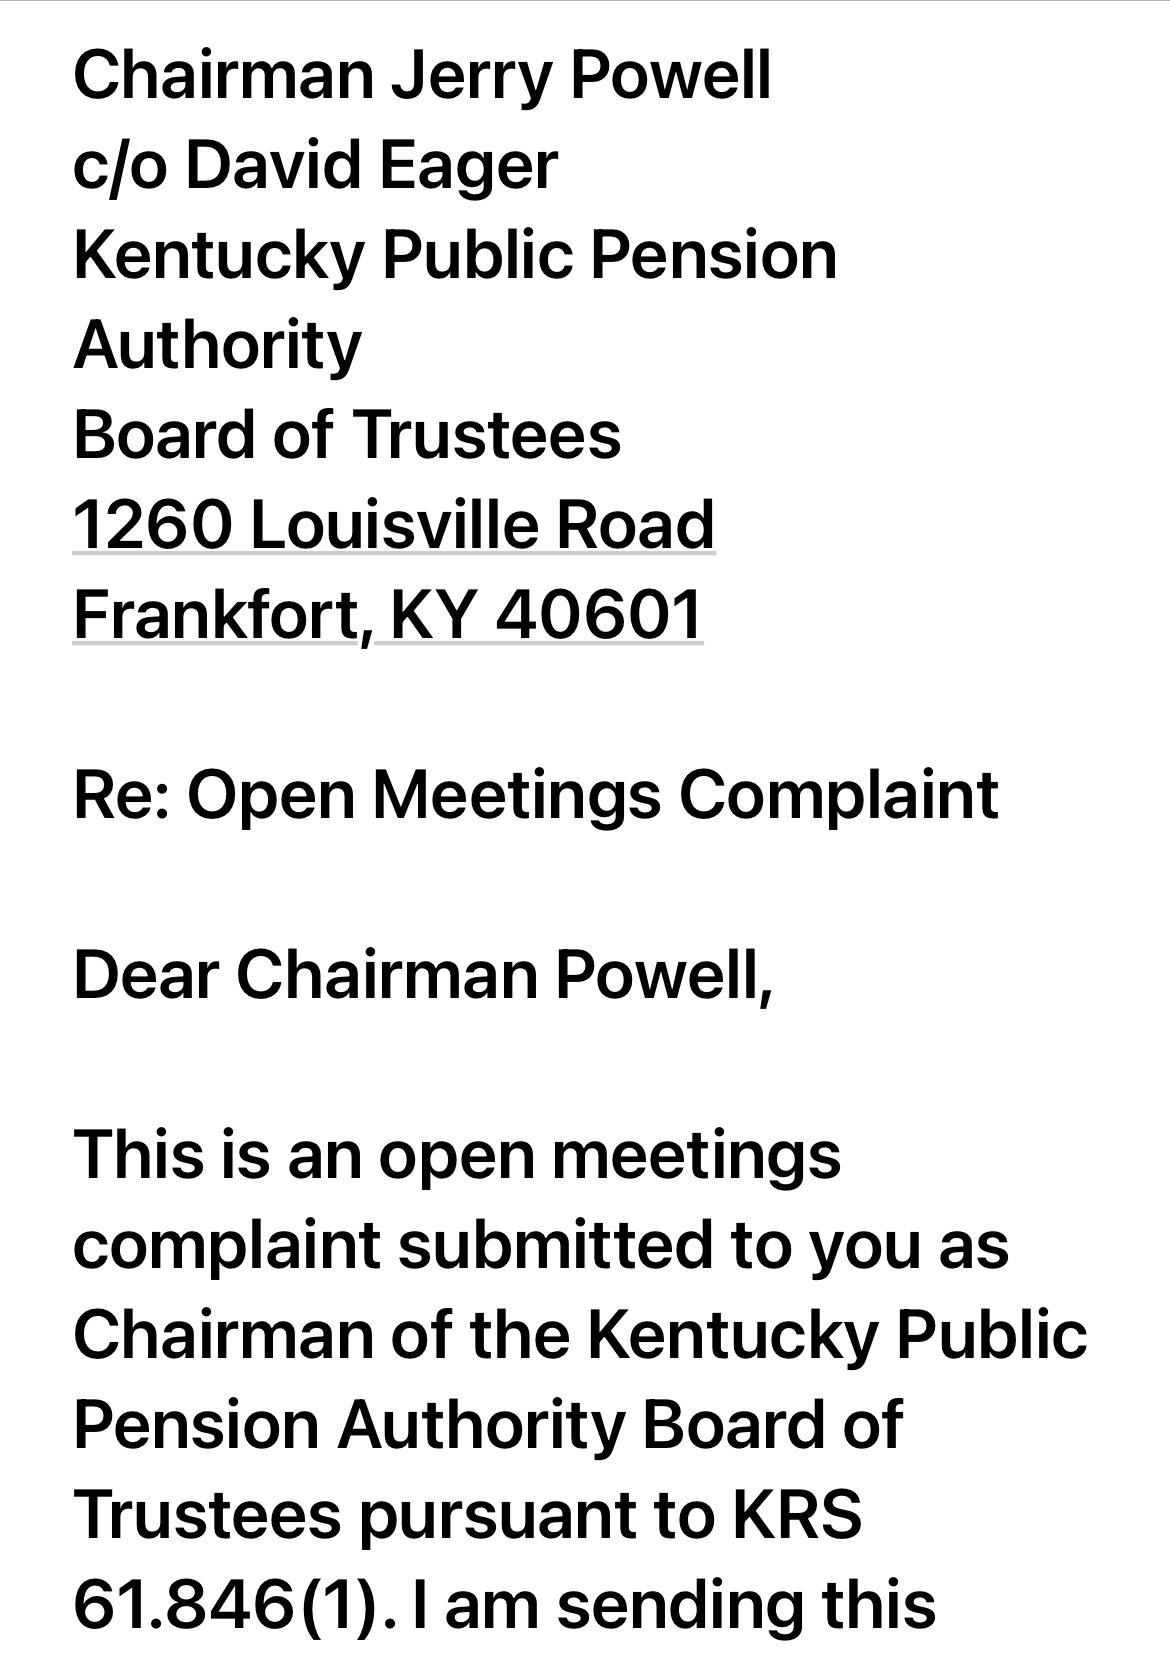 KOGC open meetings complaint to KPPA